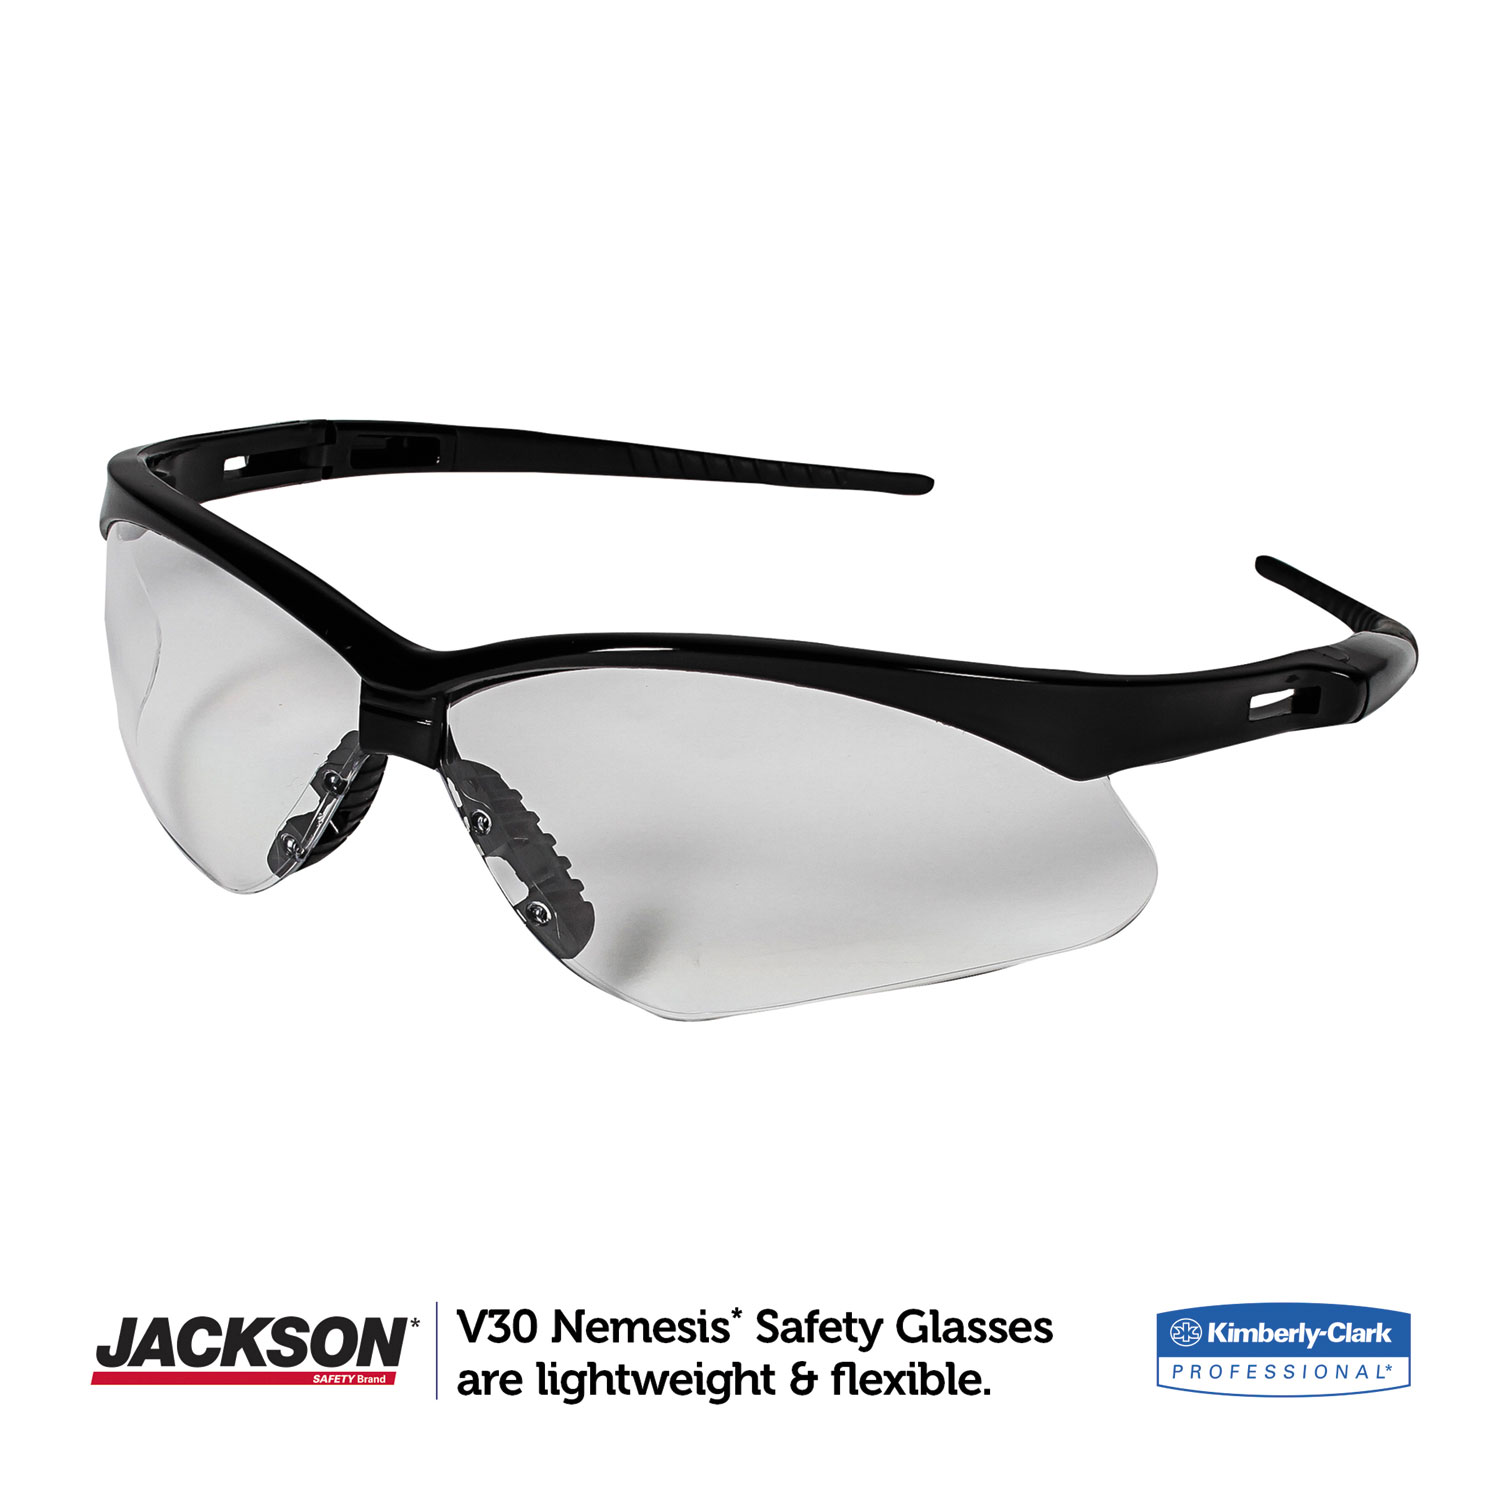 Kleenguard V30 Nemesis Safety Eyewear Zerbee